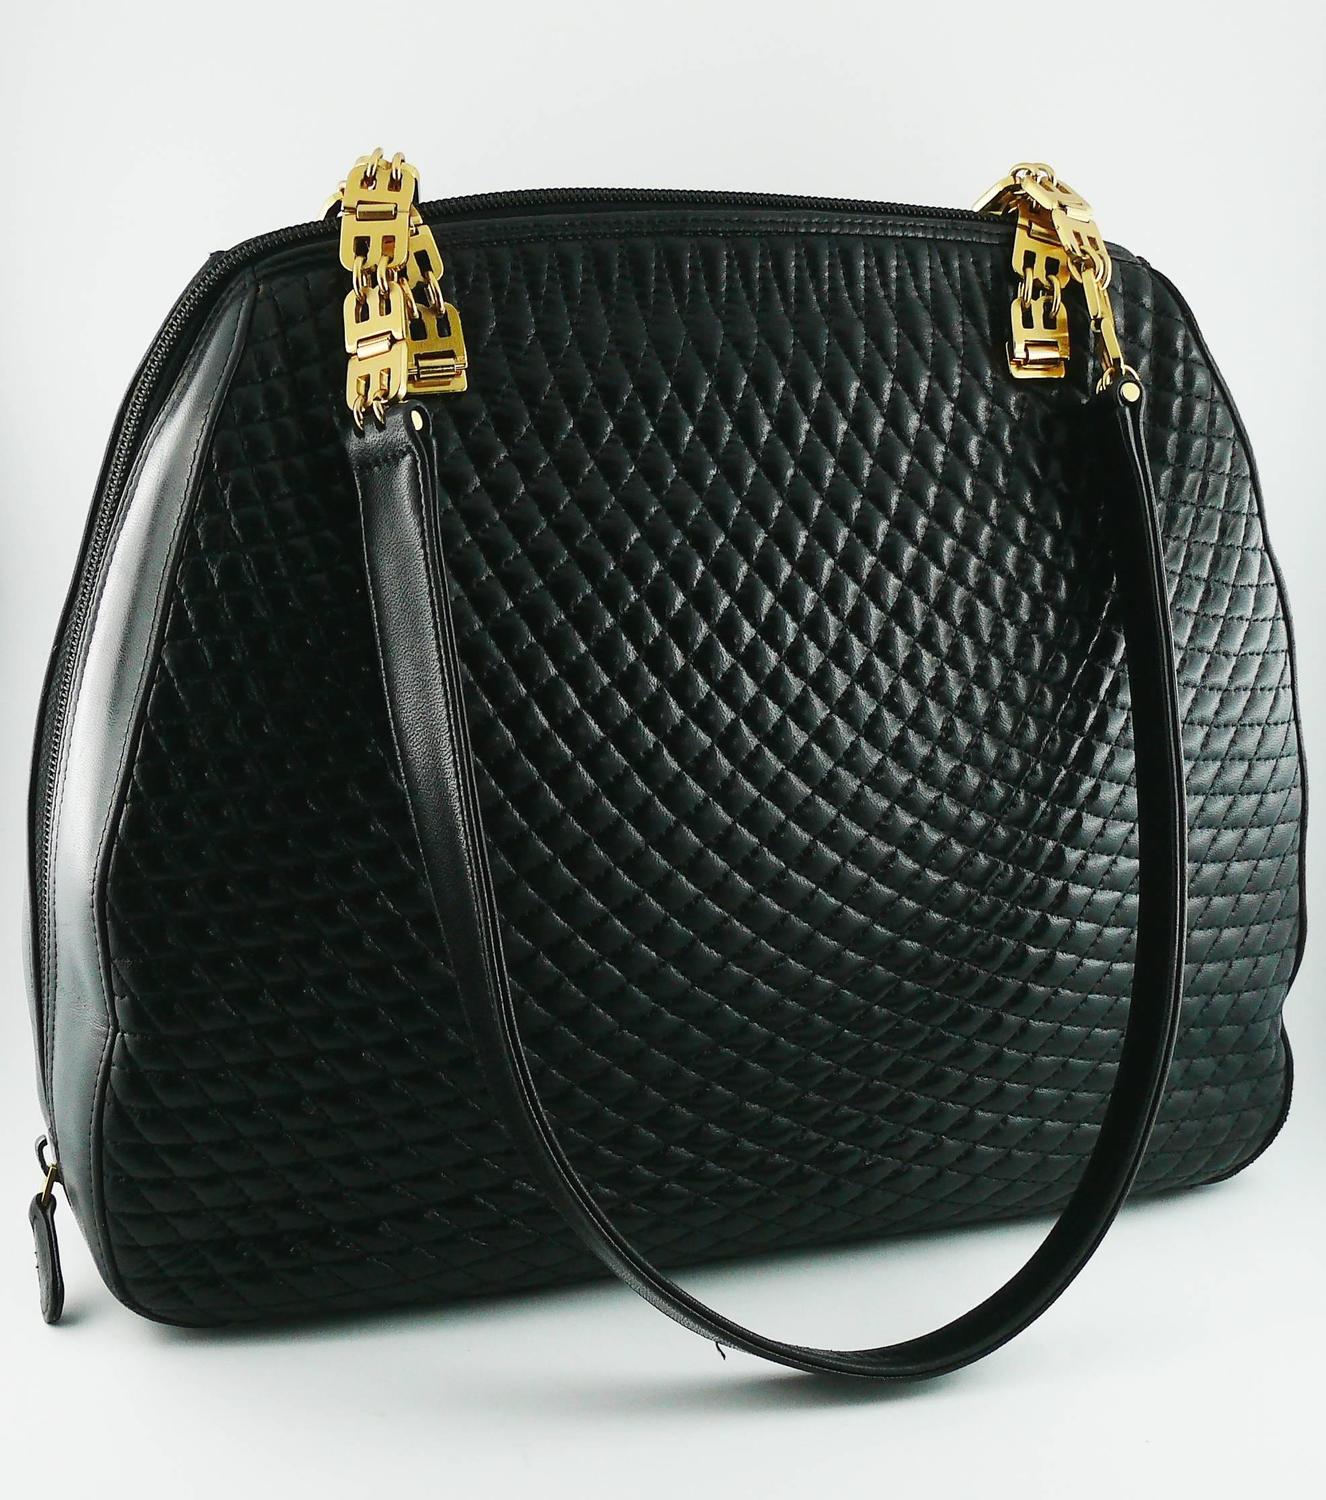 Bally Vintage Quilted Black Leather Shoulder Gold Chain Bag For Sale at 1stdibs